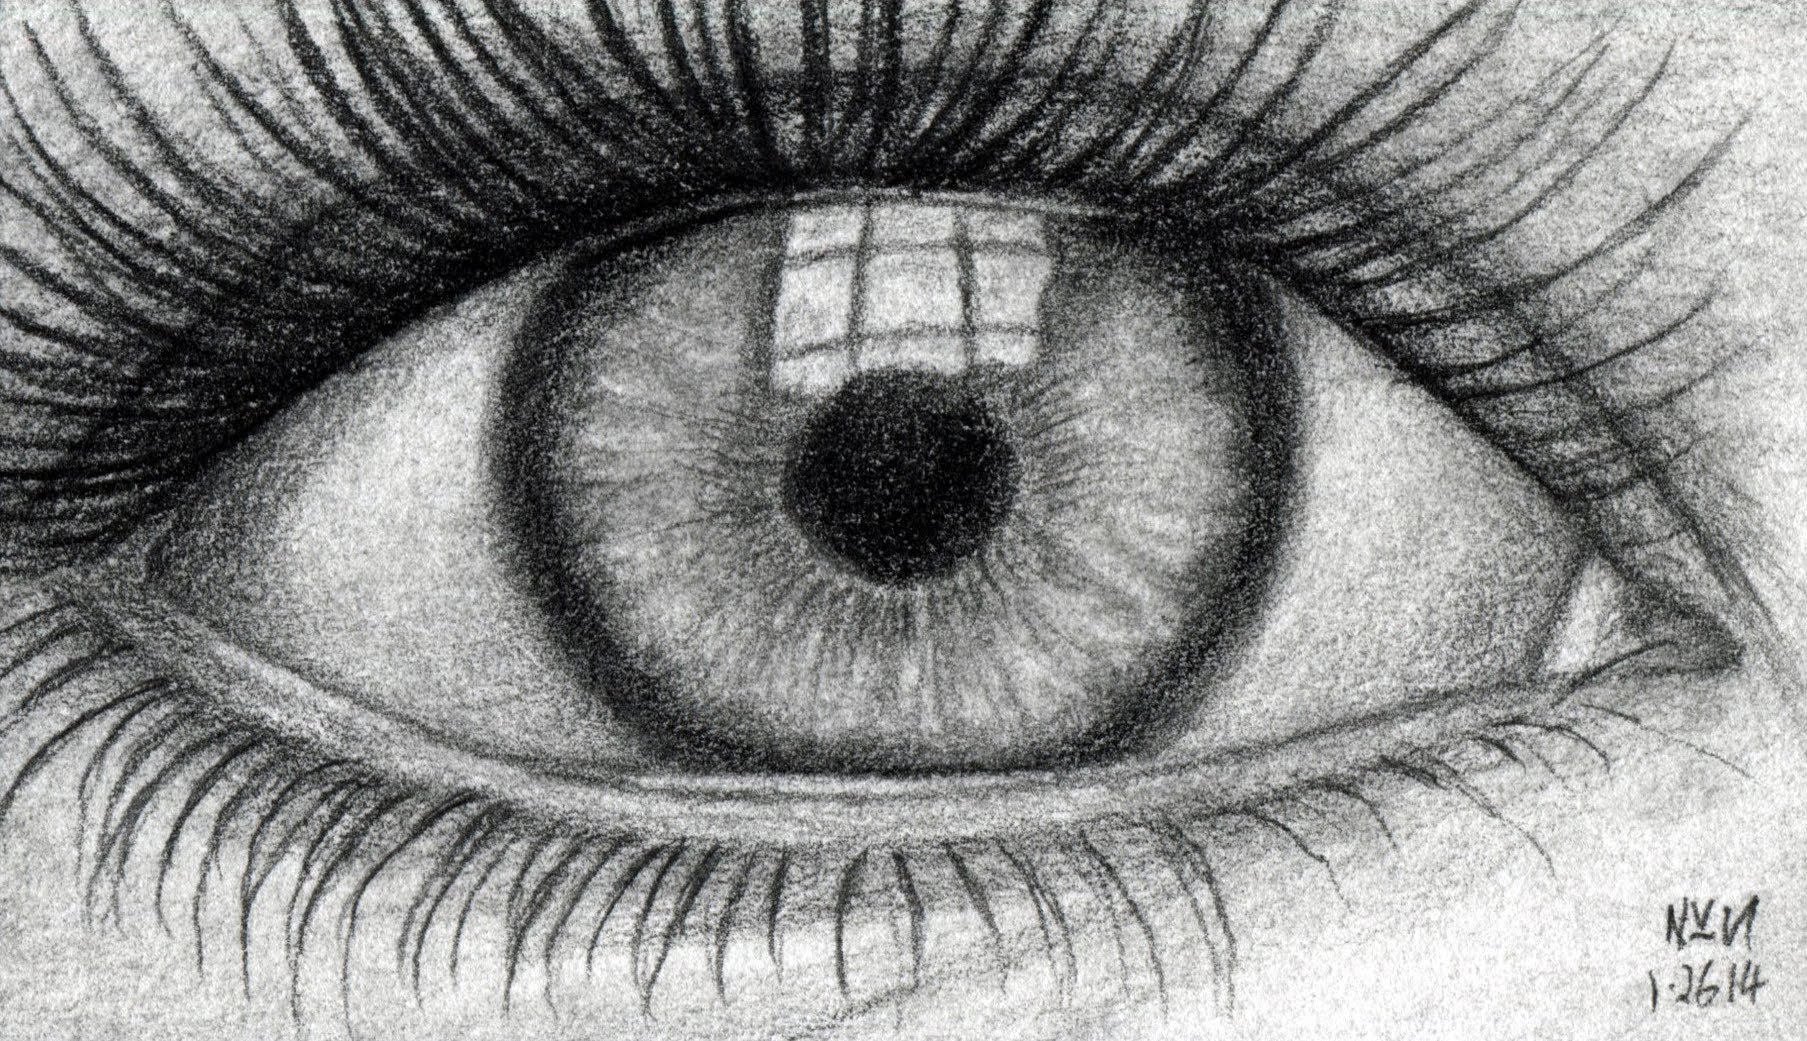 black and white eye sketch